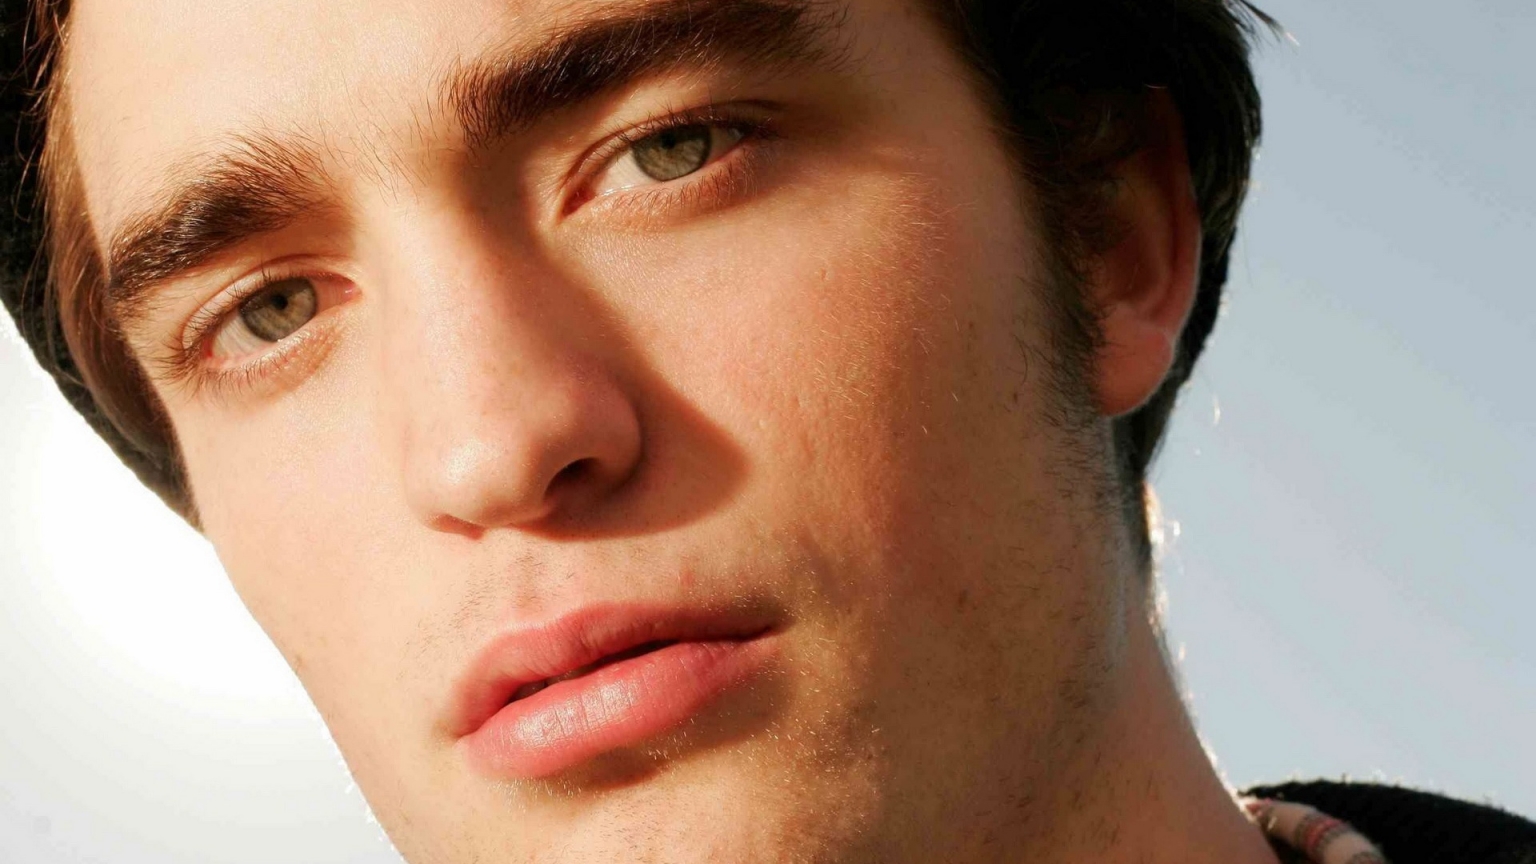 Robert Pattinson Close-up for 1536 x 864 HDTV resolution